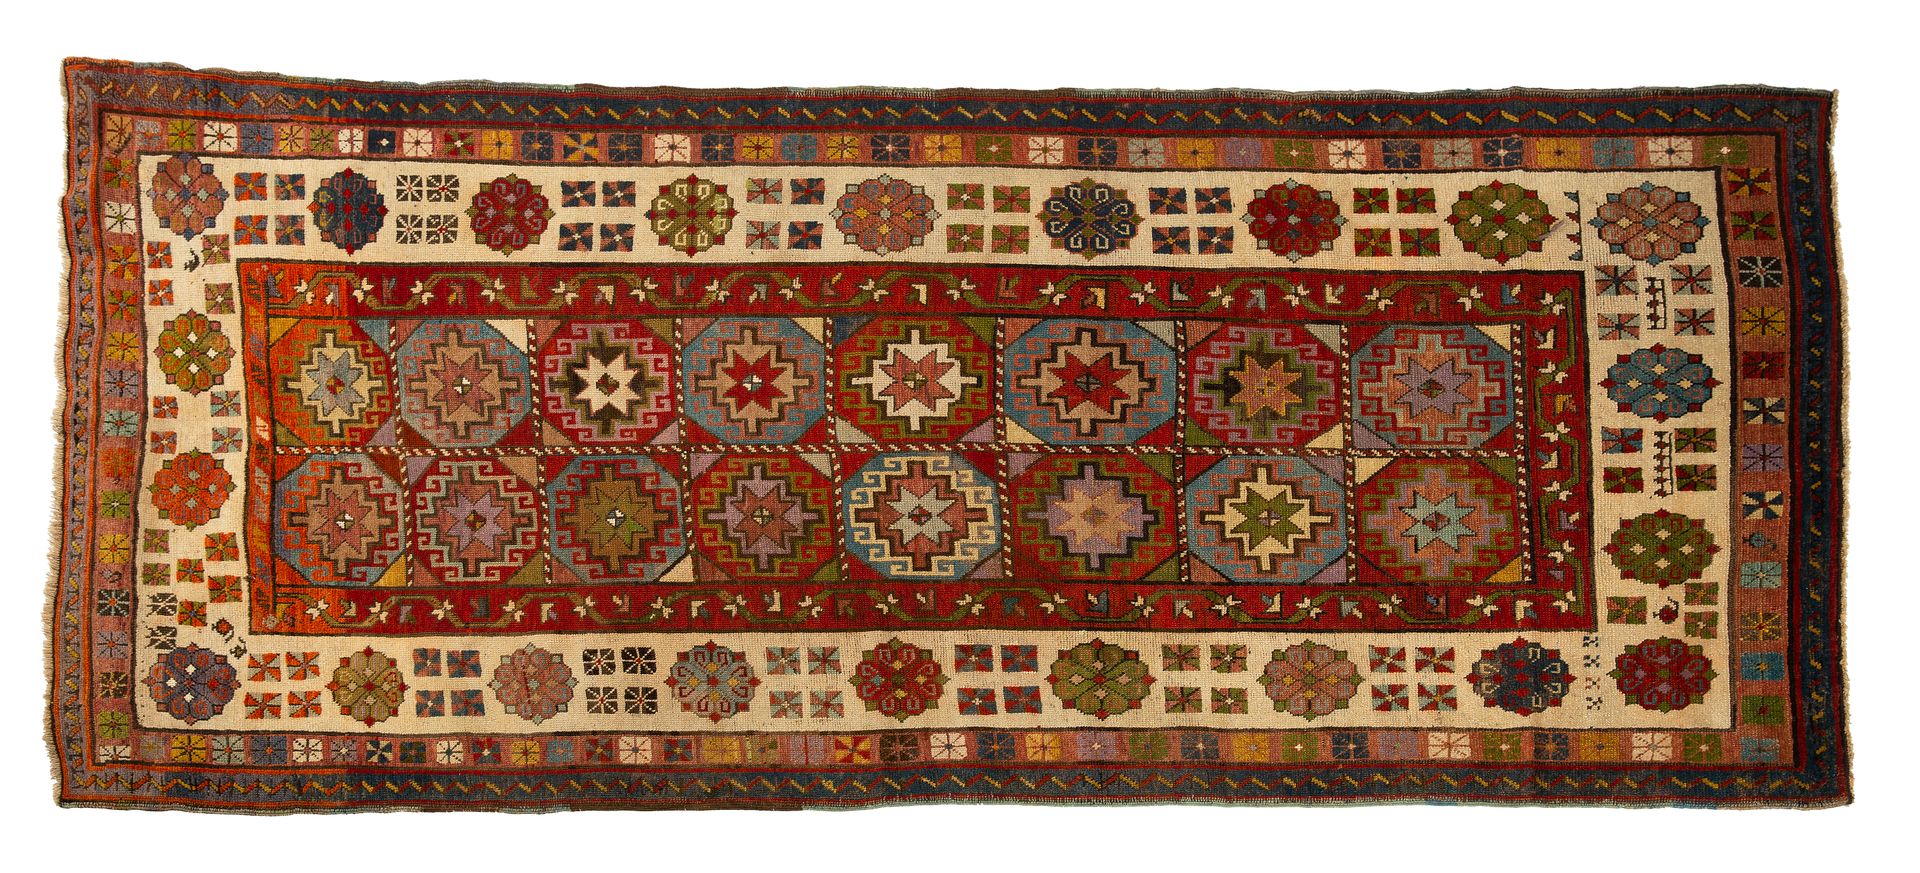 Null TALISH-Teppich (Kaukasus), Ende des 19. Jahrhunderts.

Jahrhundert. Maße: 2&hellip;